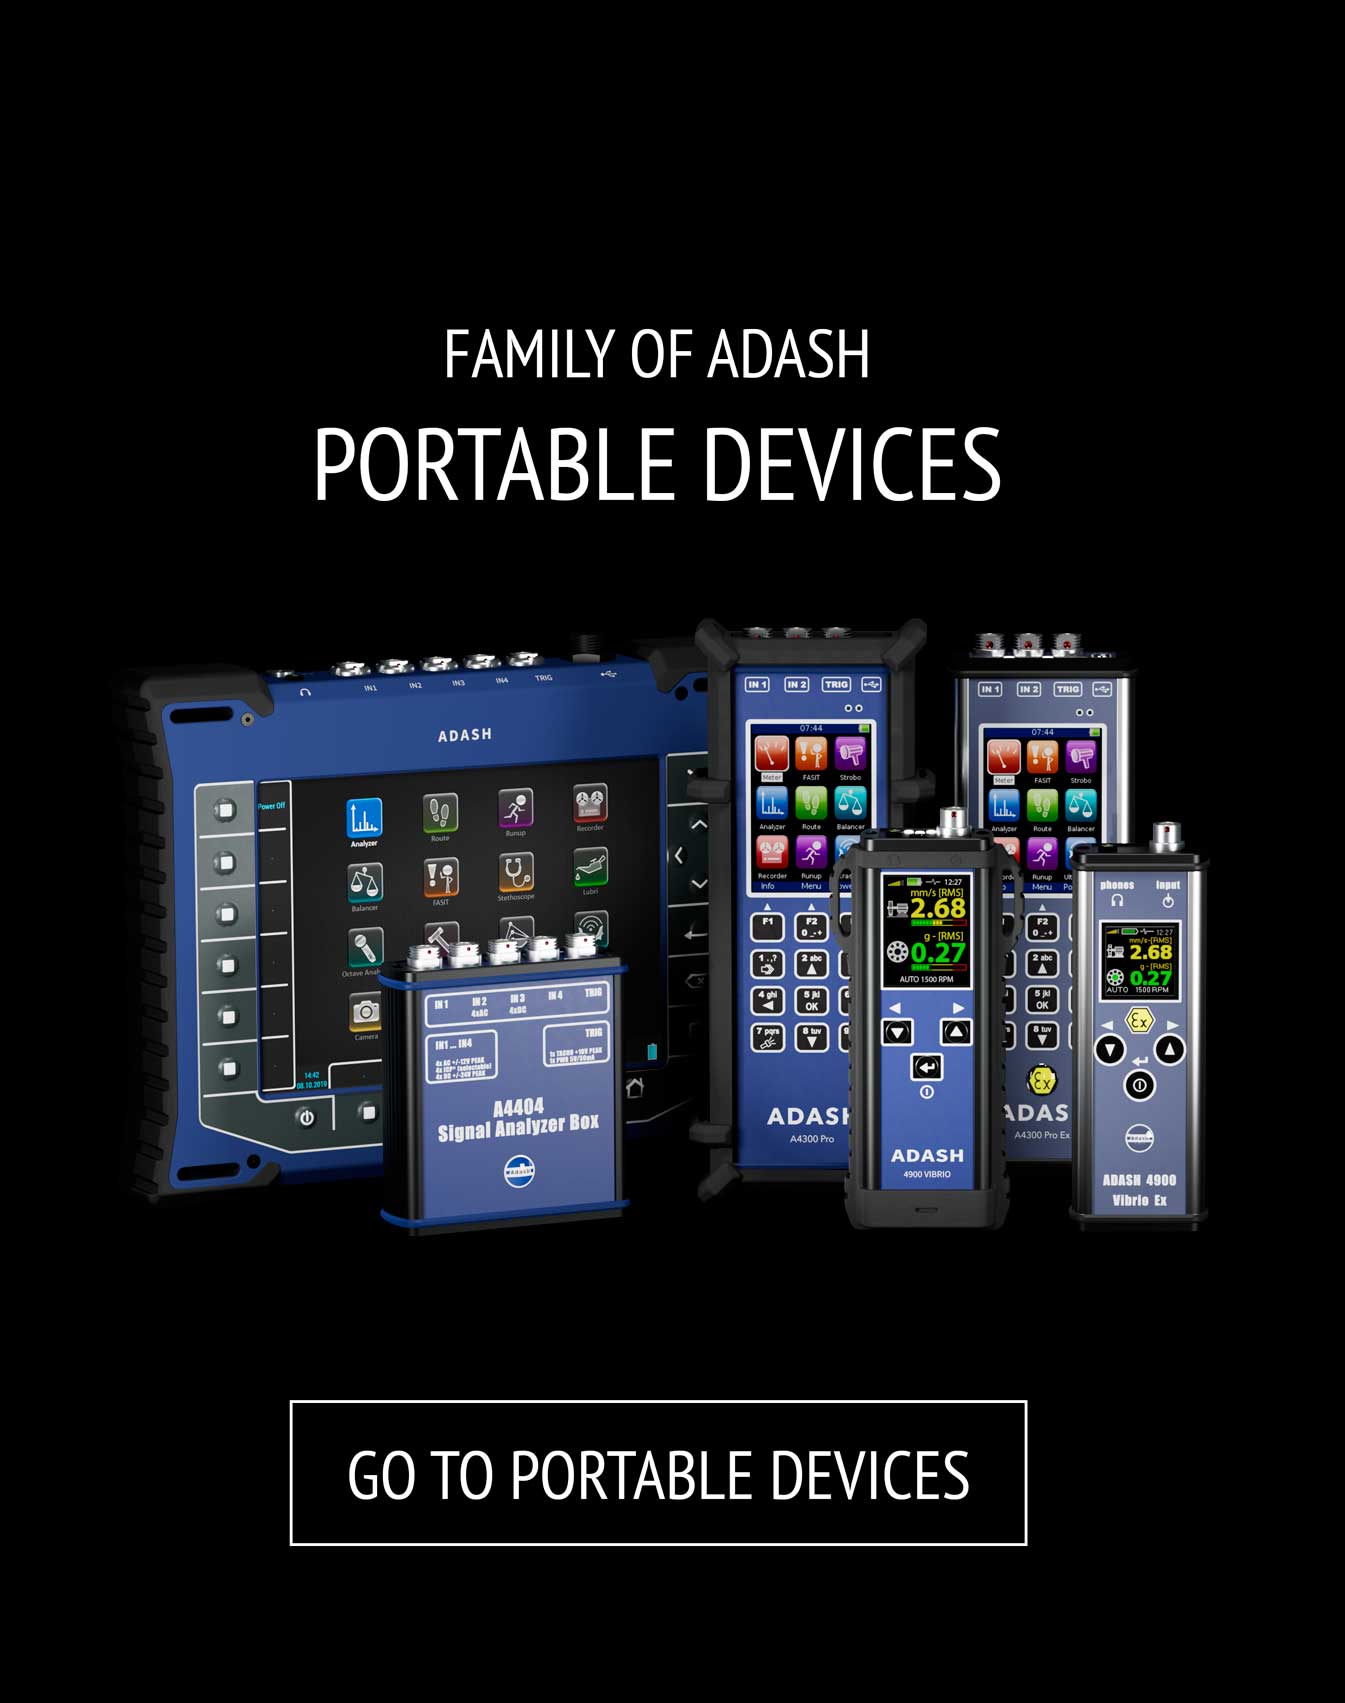 Adash portable devices